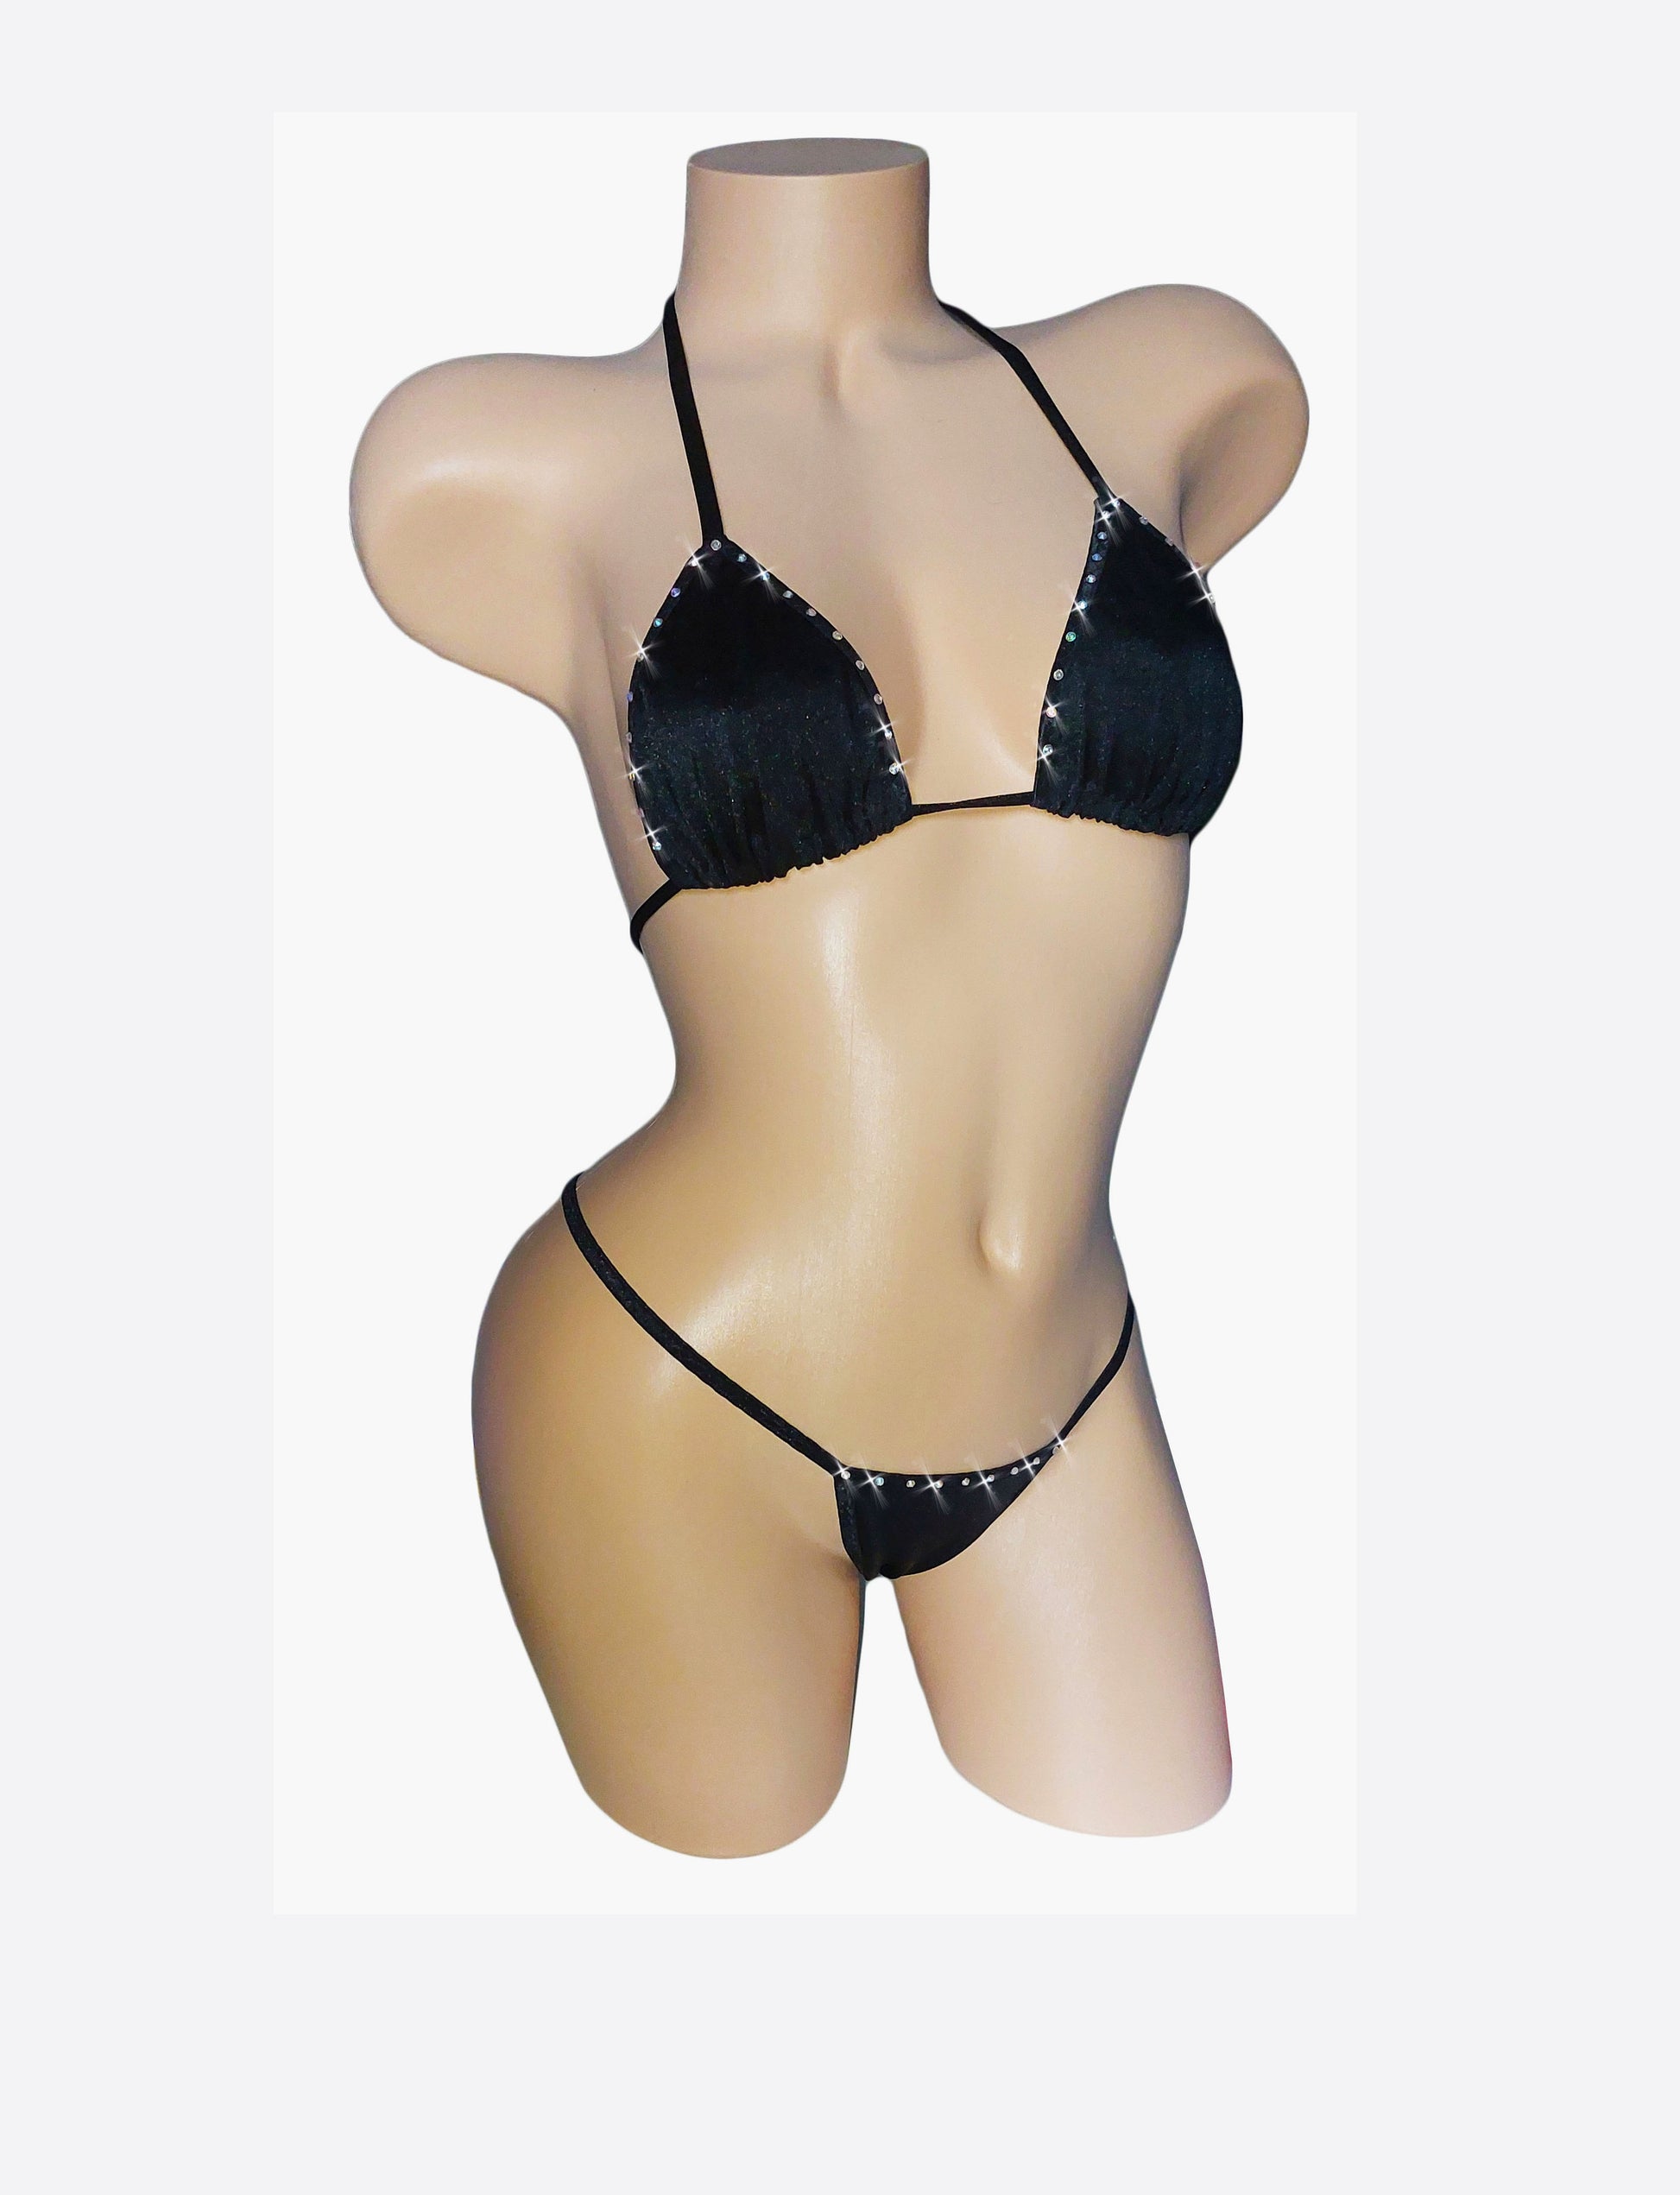 Gorg black sparkly rhinestone underwear set/bikini ! - Depop